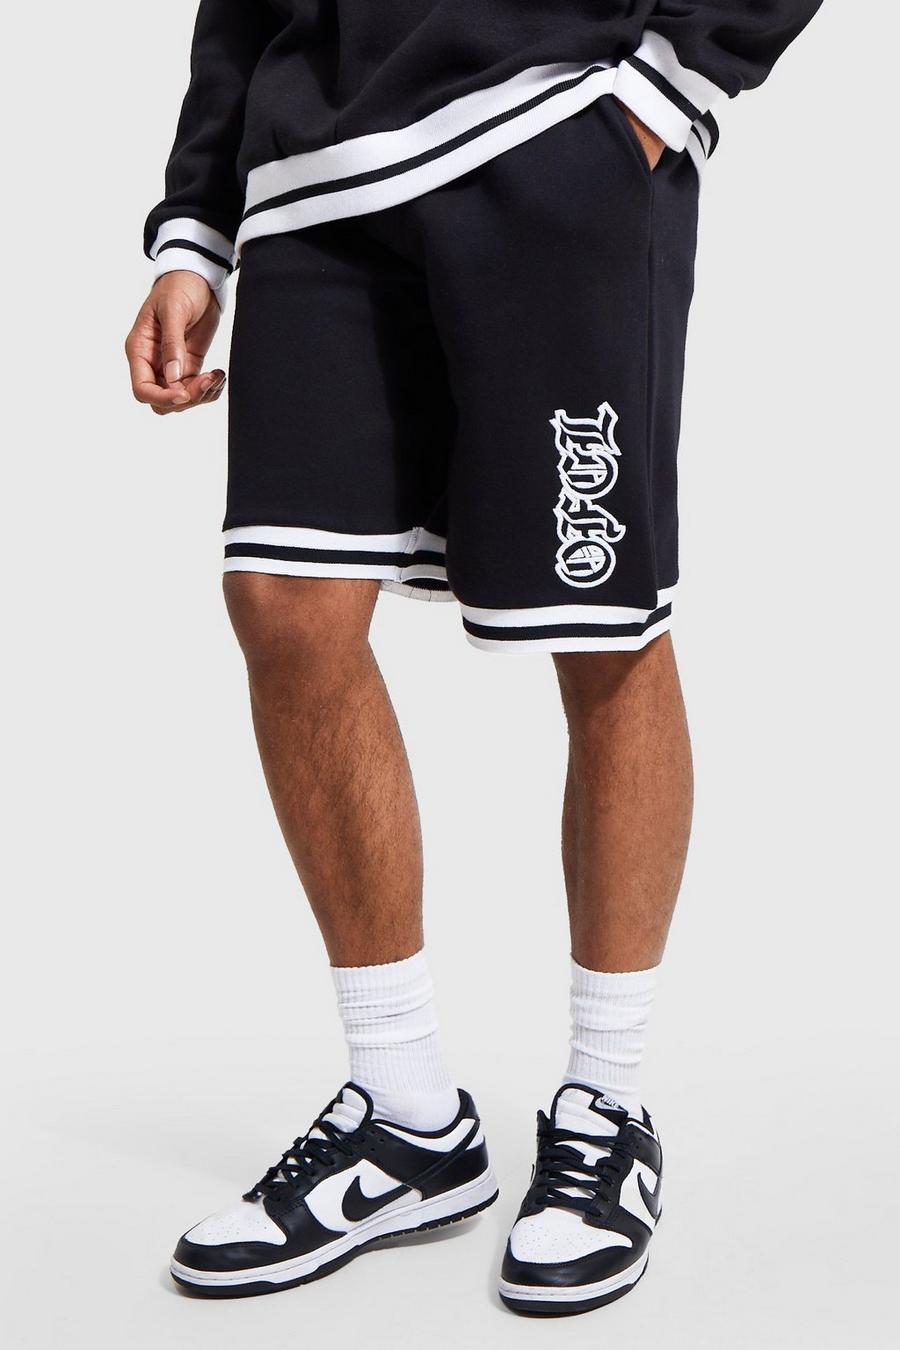 Pantalón corto estilo baloncesto con aplique universitario Ofcl, Black negro